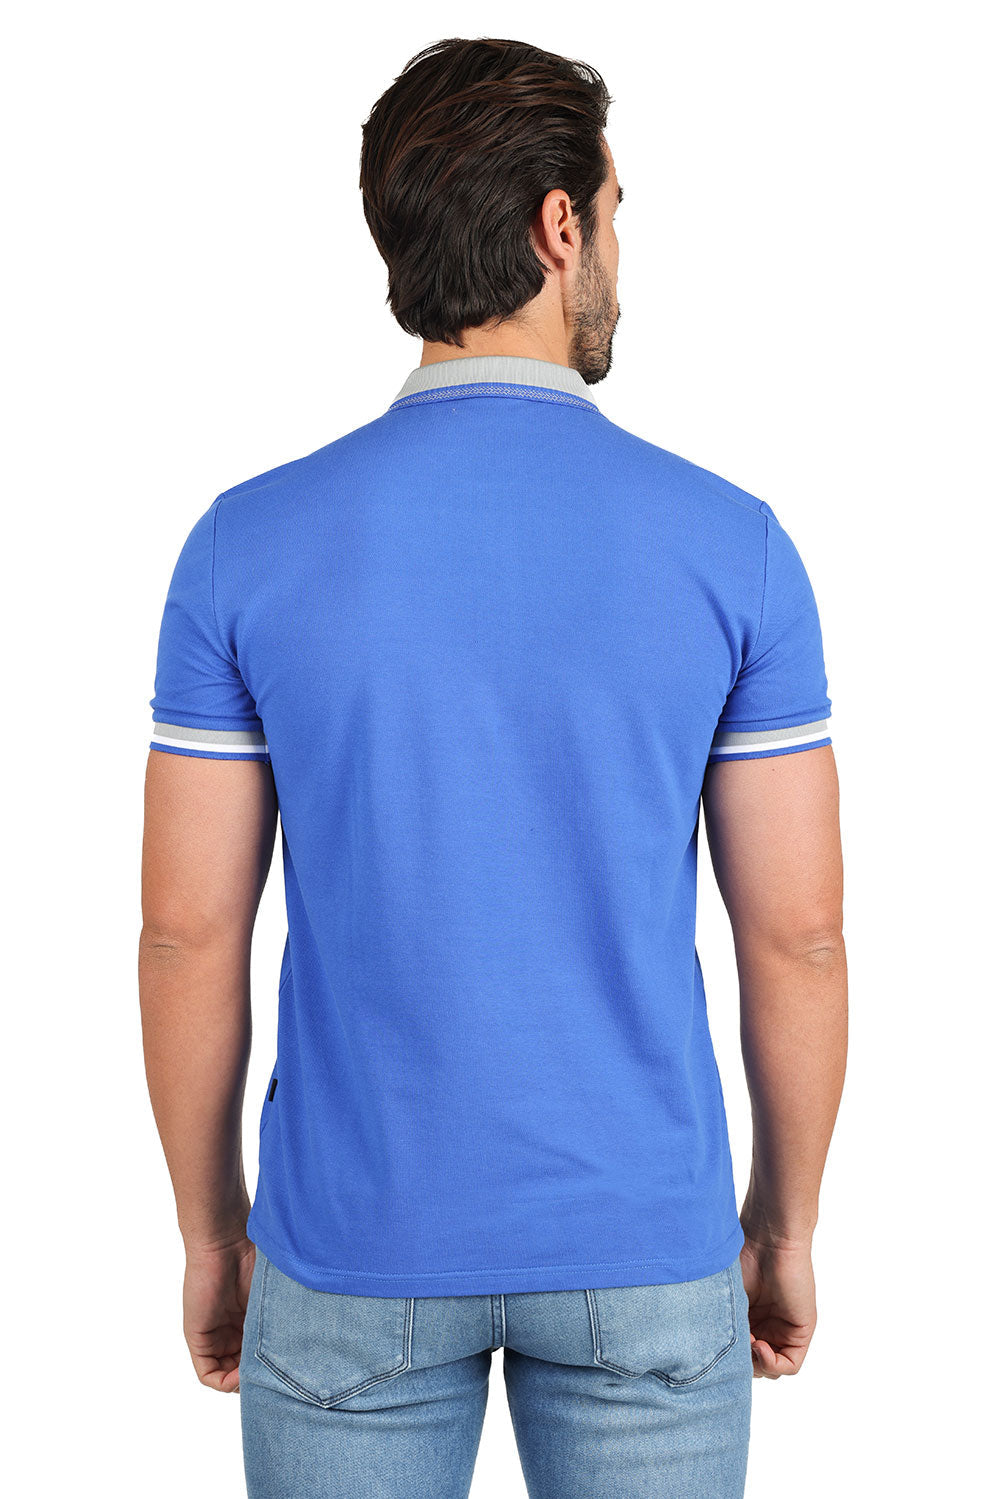 BARABAS Men's Premium Solid Color Short Sleeve Polo shirts 3PP839 Royal Blue